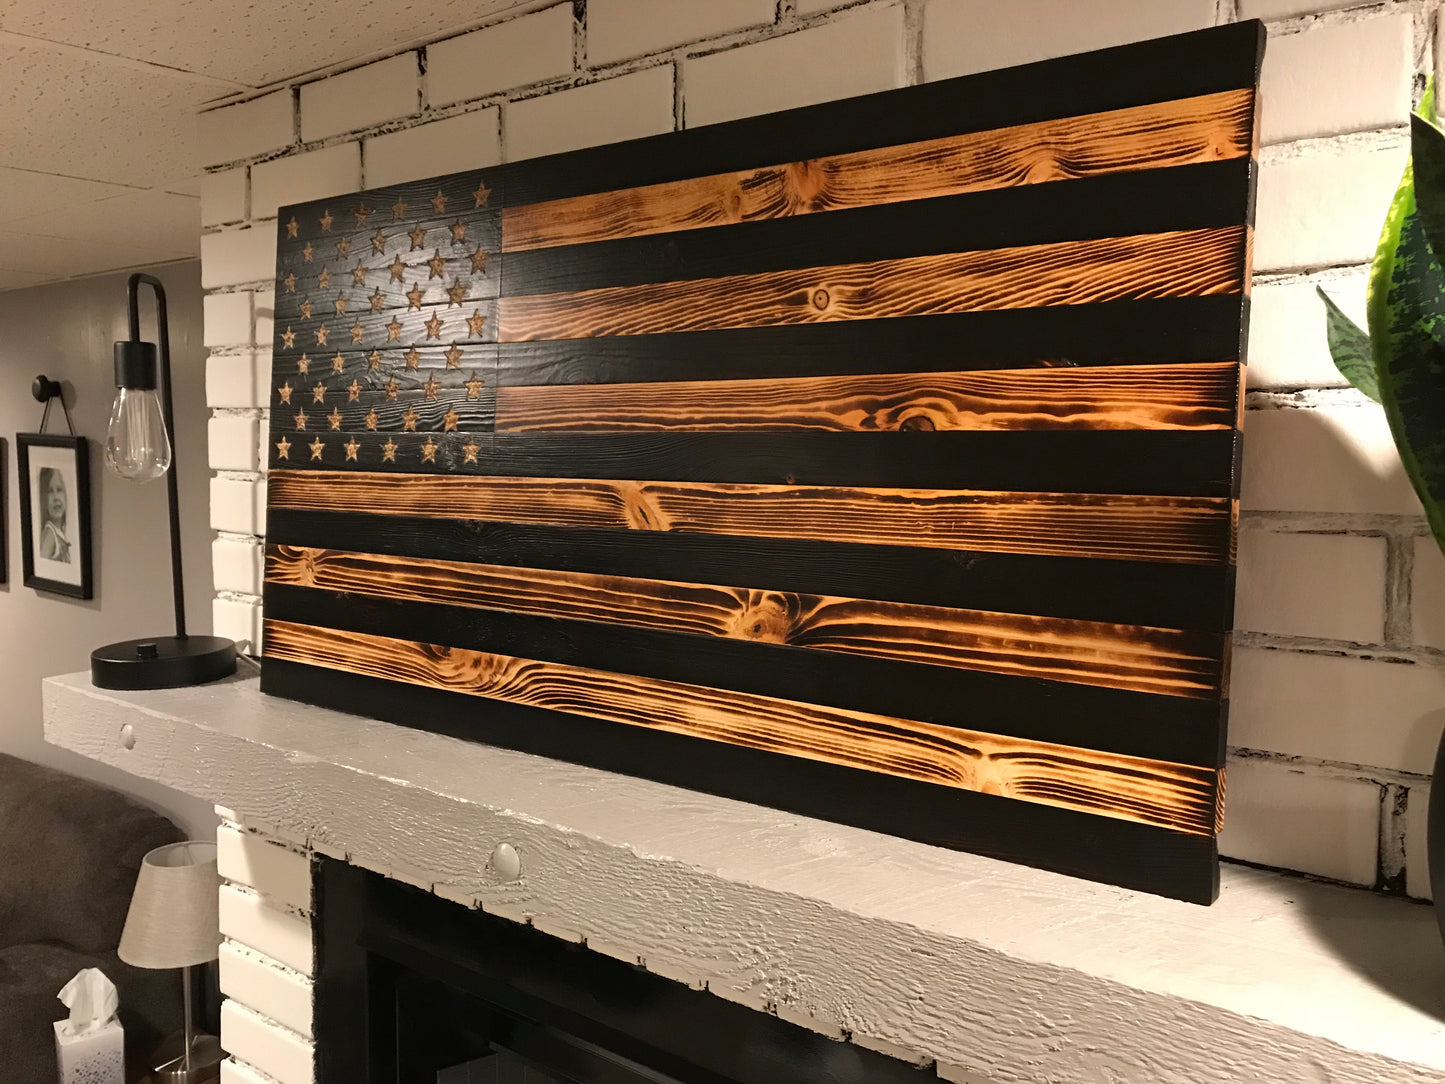 Rustic American Wooden Flag Charred Black Stripes